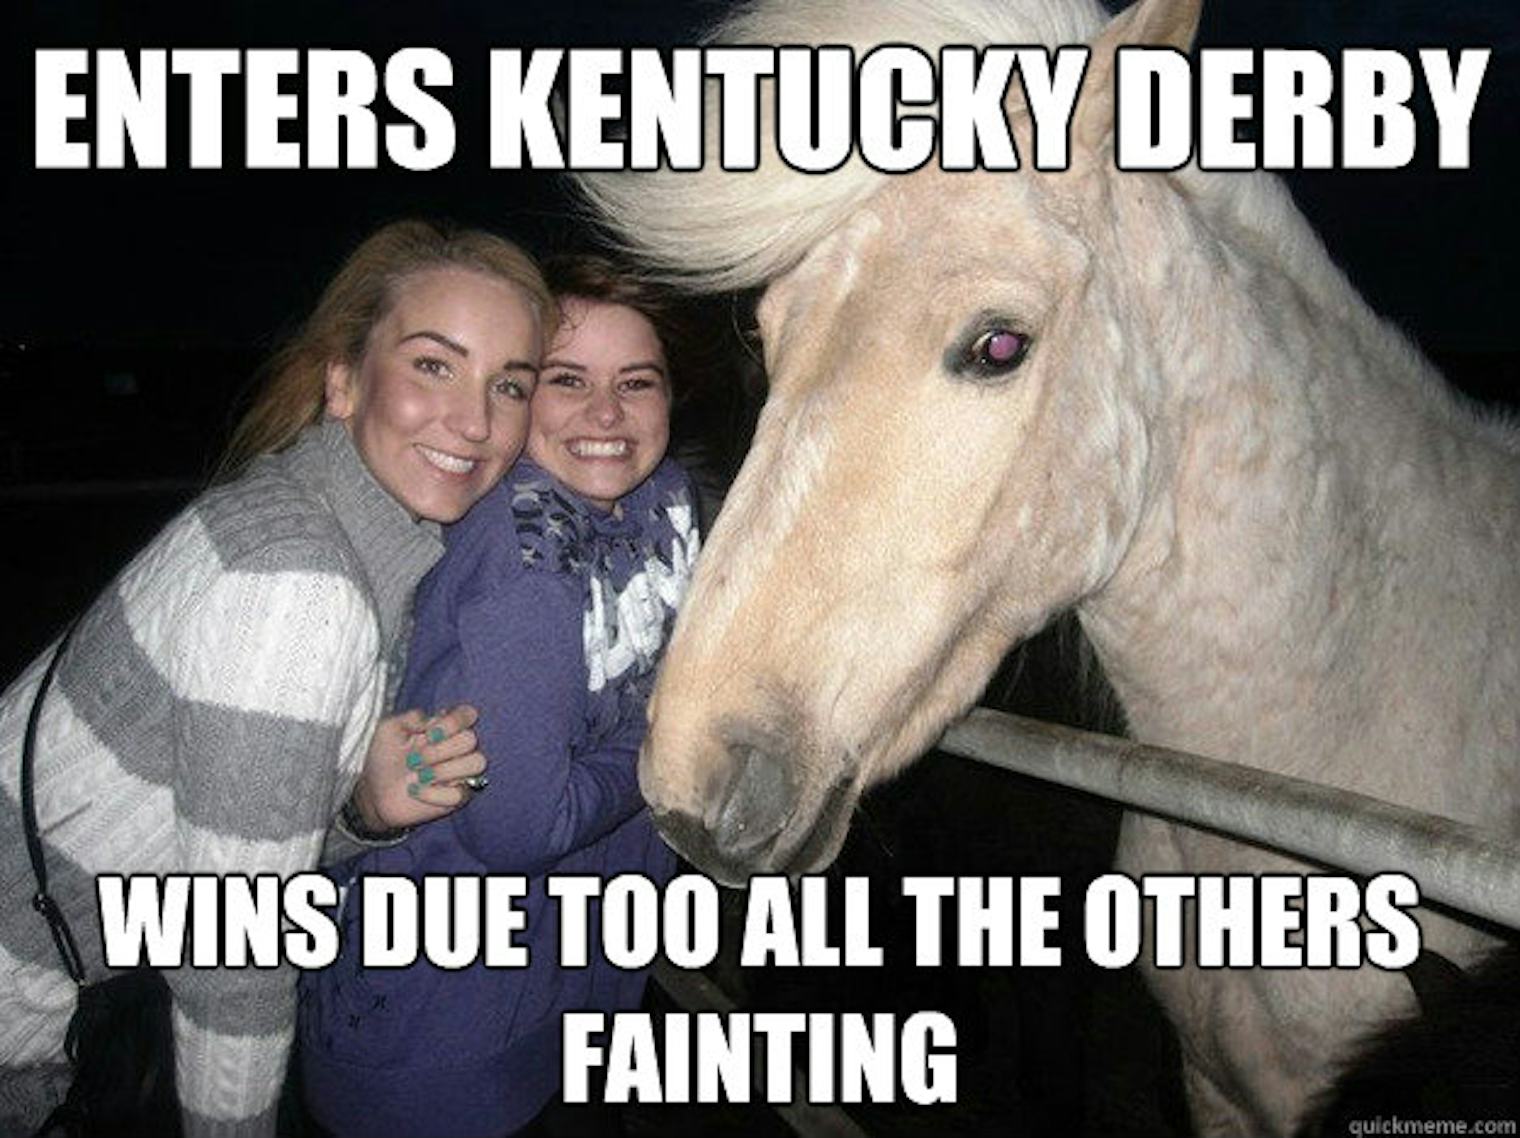 Kentucky Derby Memes & Jokes That Will Make Even NonRacing Fans LOL